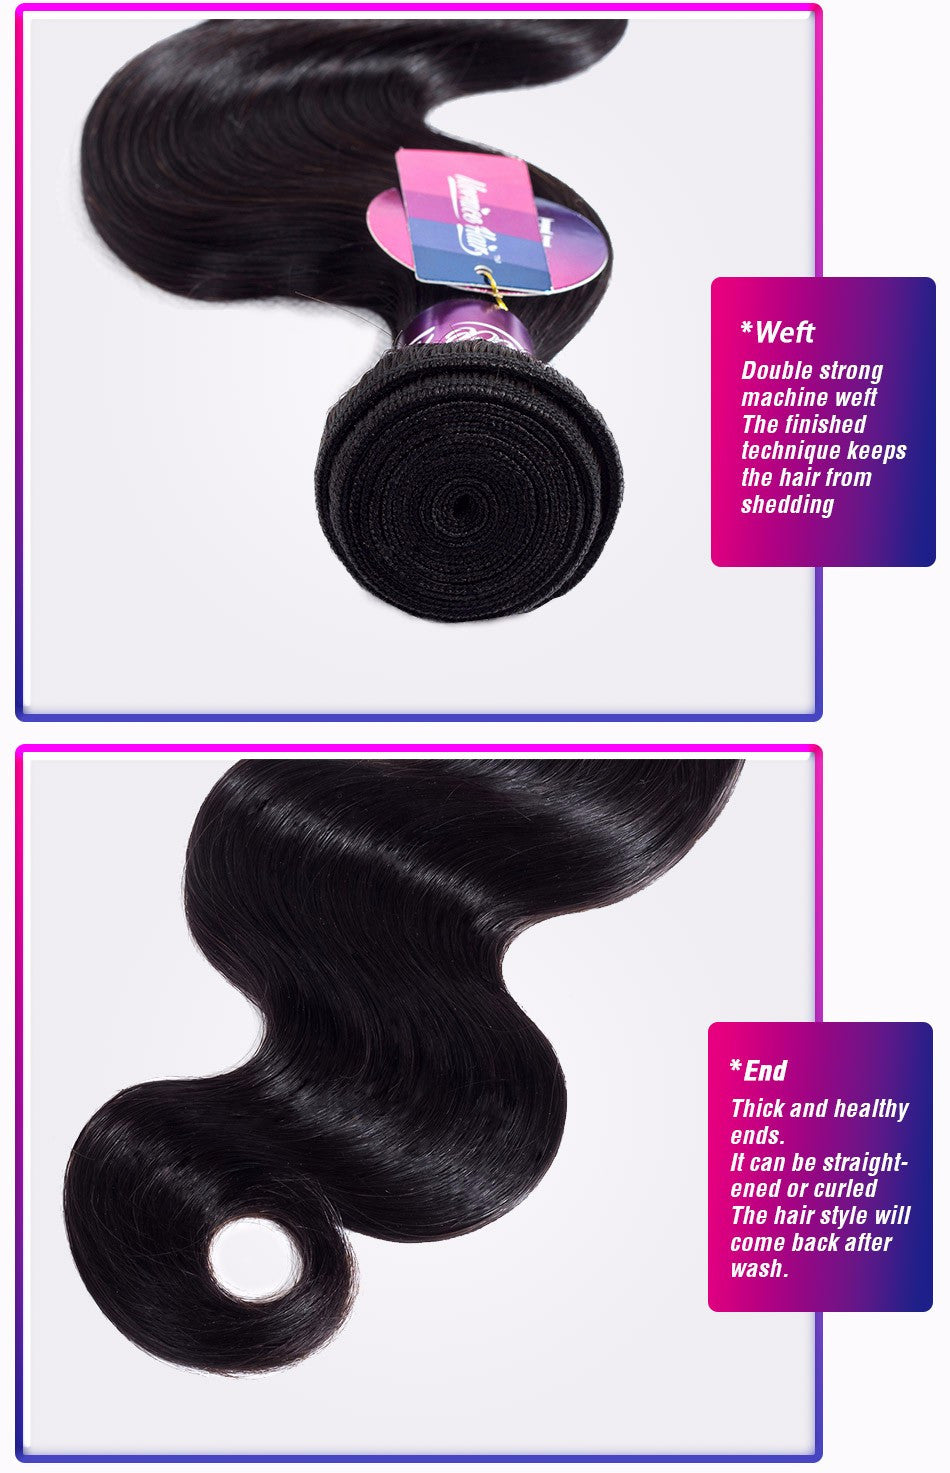 Mornice Hair Malaysian Remy Hair Body Wave 1 Bundle Natural Color 12-26 Inch 100% Human Hair Free Shipping 100g